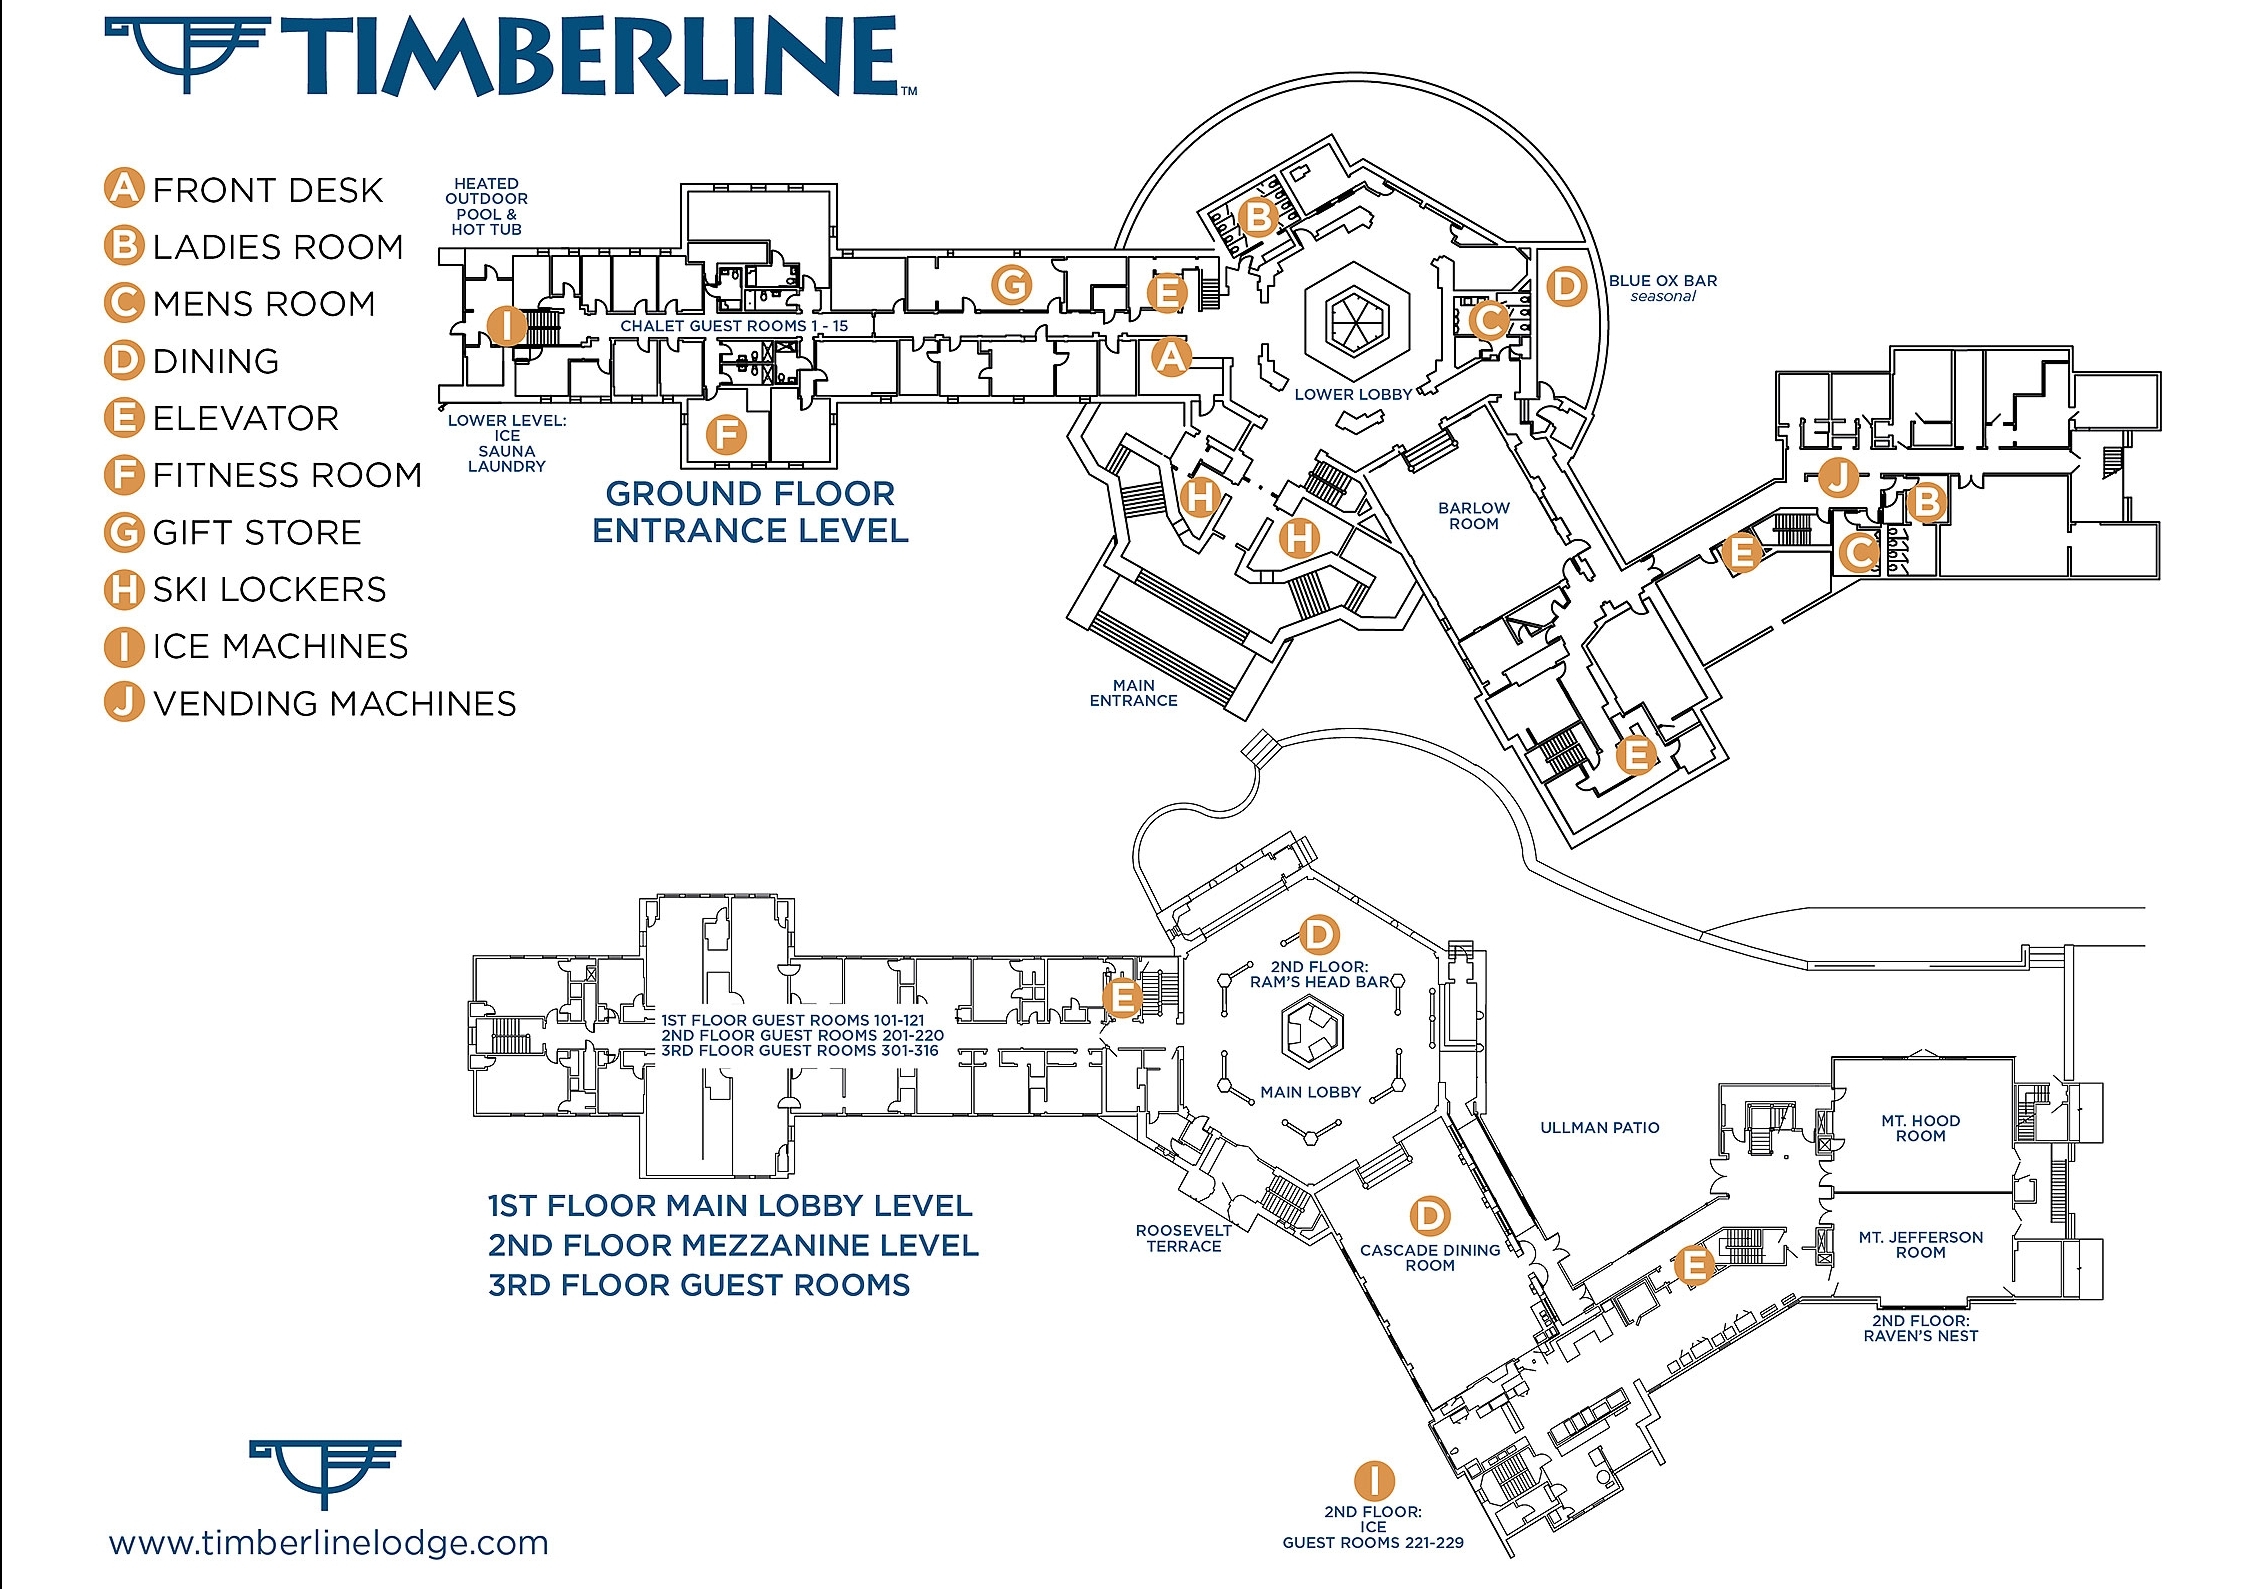 TIMBERLINE LODGE MAP